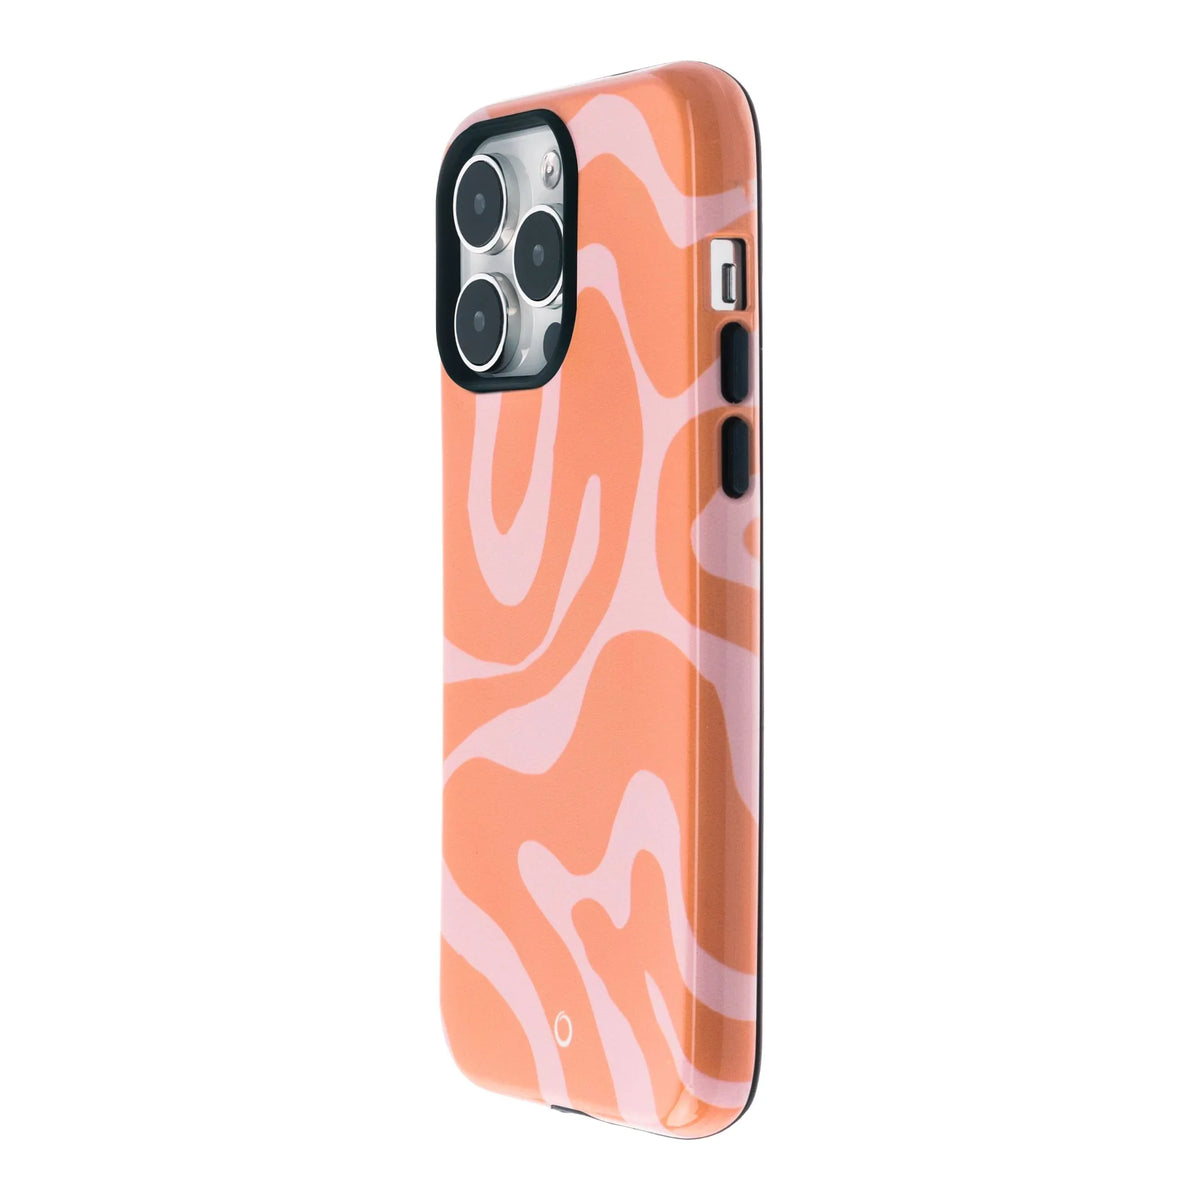 Orange Swirl iPhone Case - iPhone 12 Pro